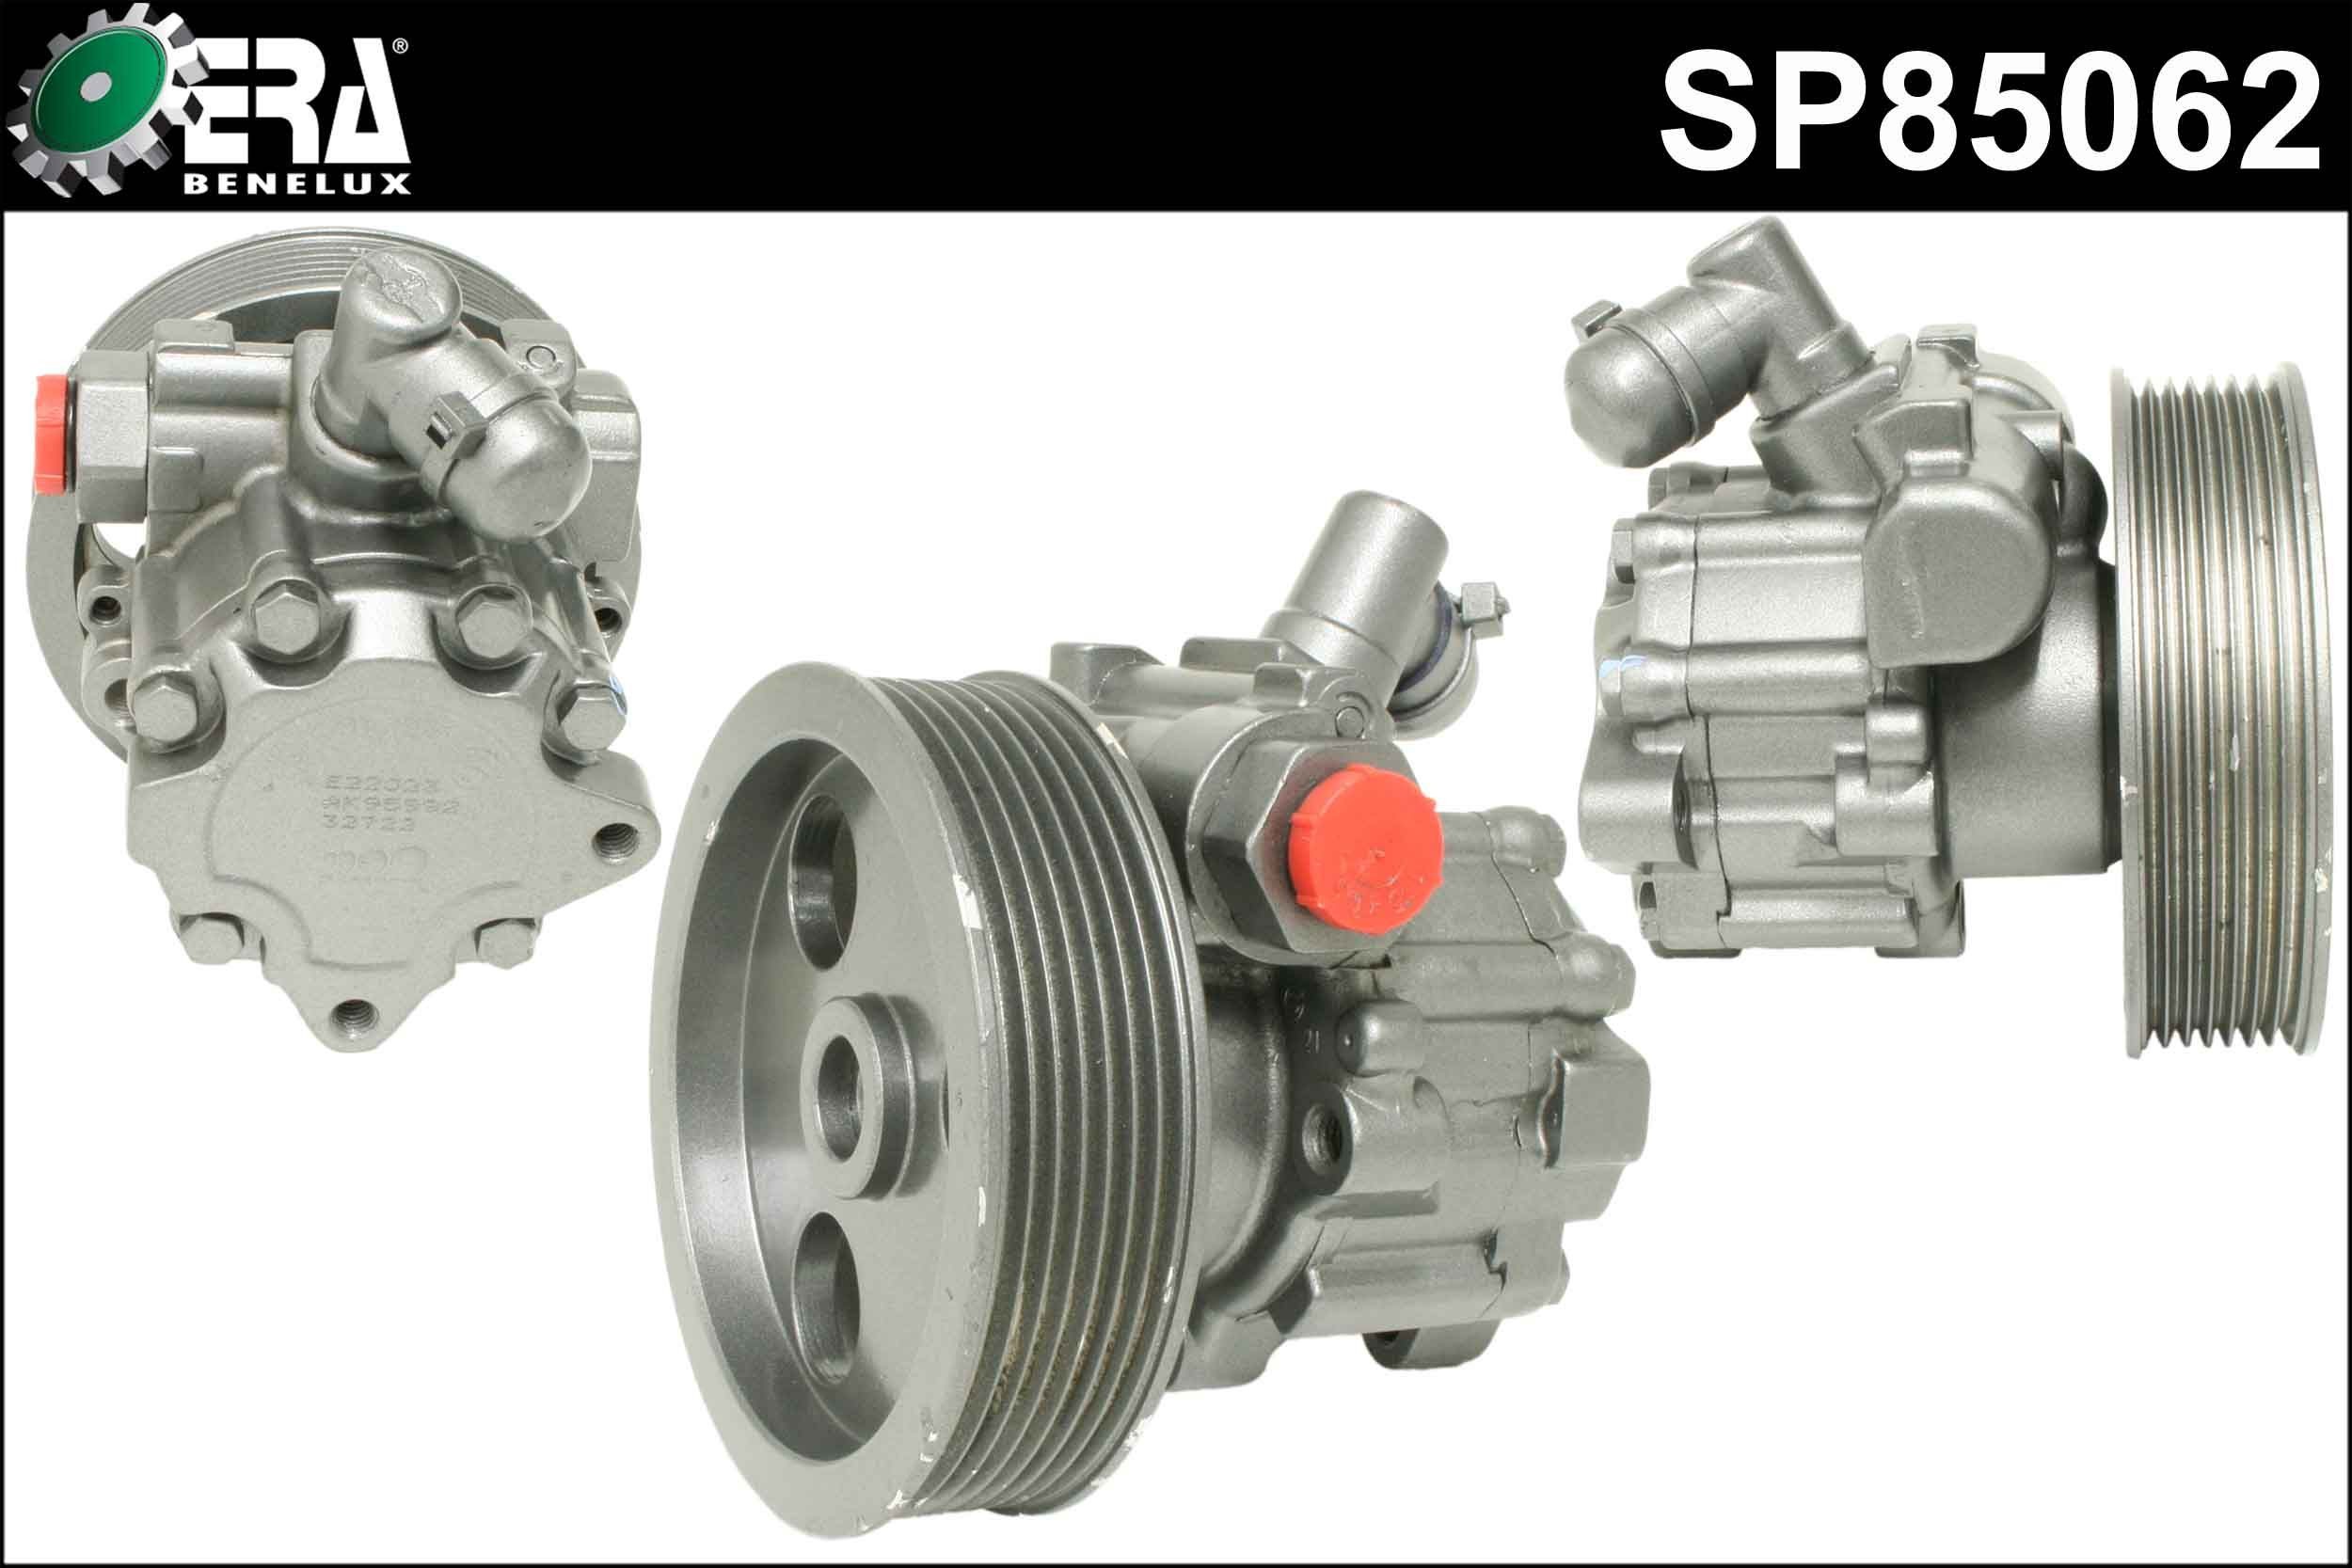 ERA Benelux SP85062 Power steering pump A0054660101